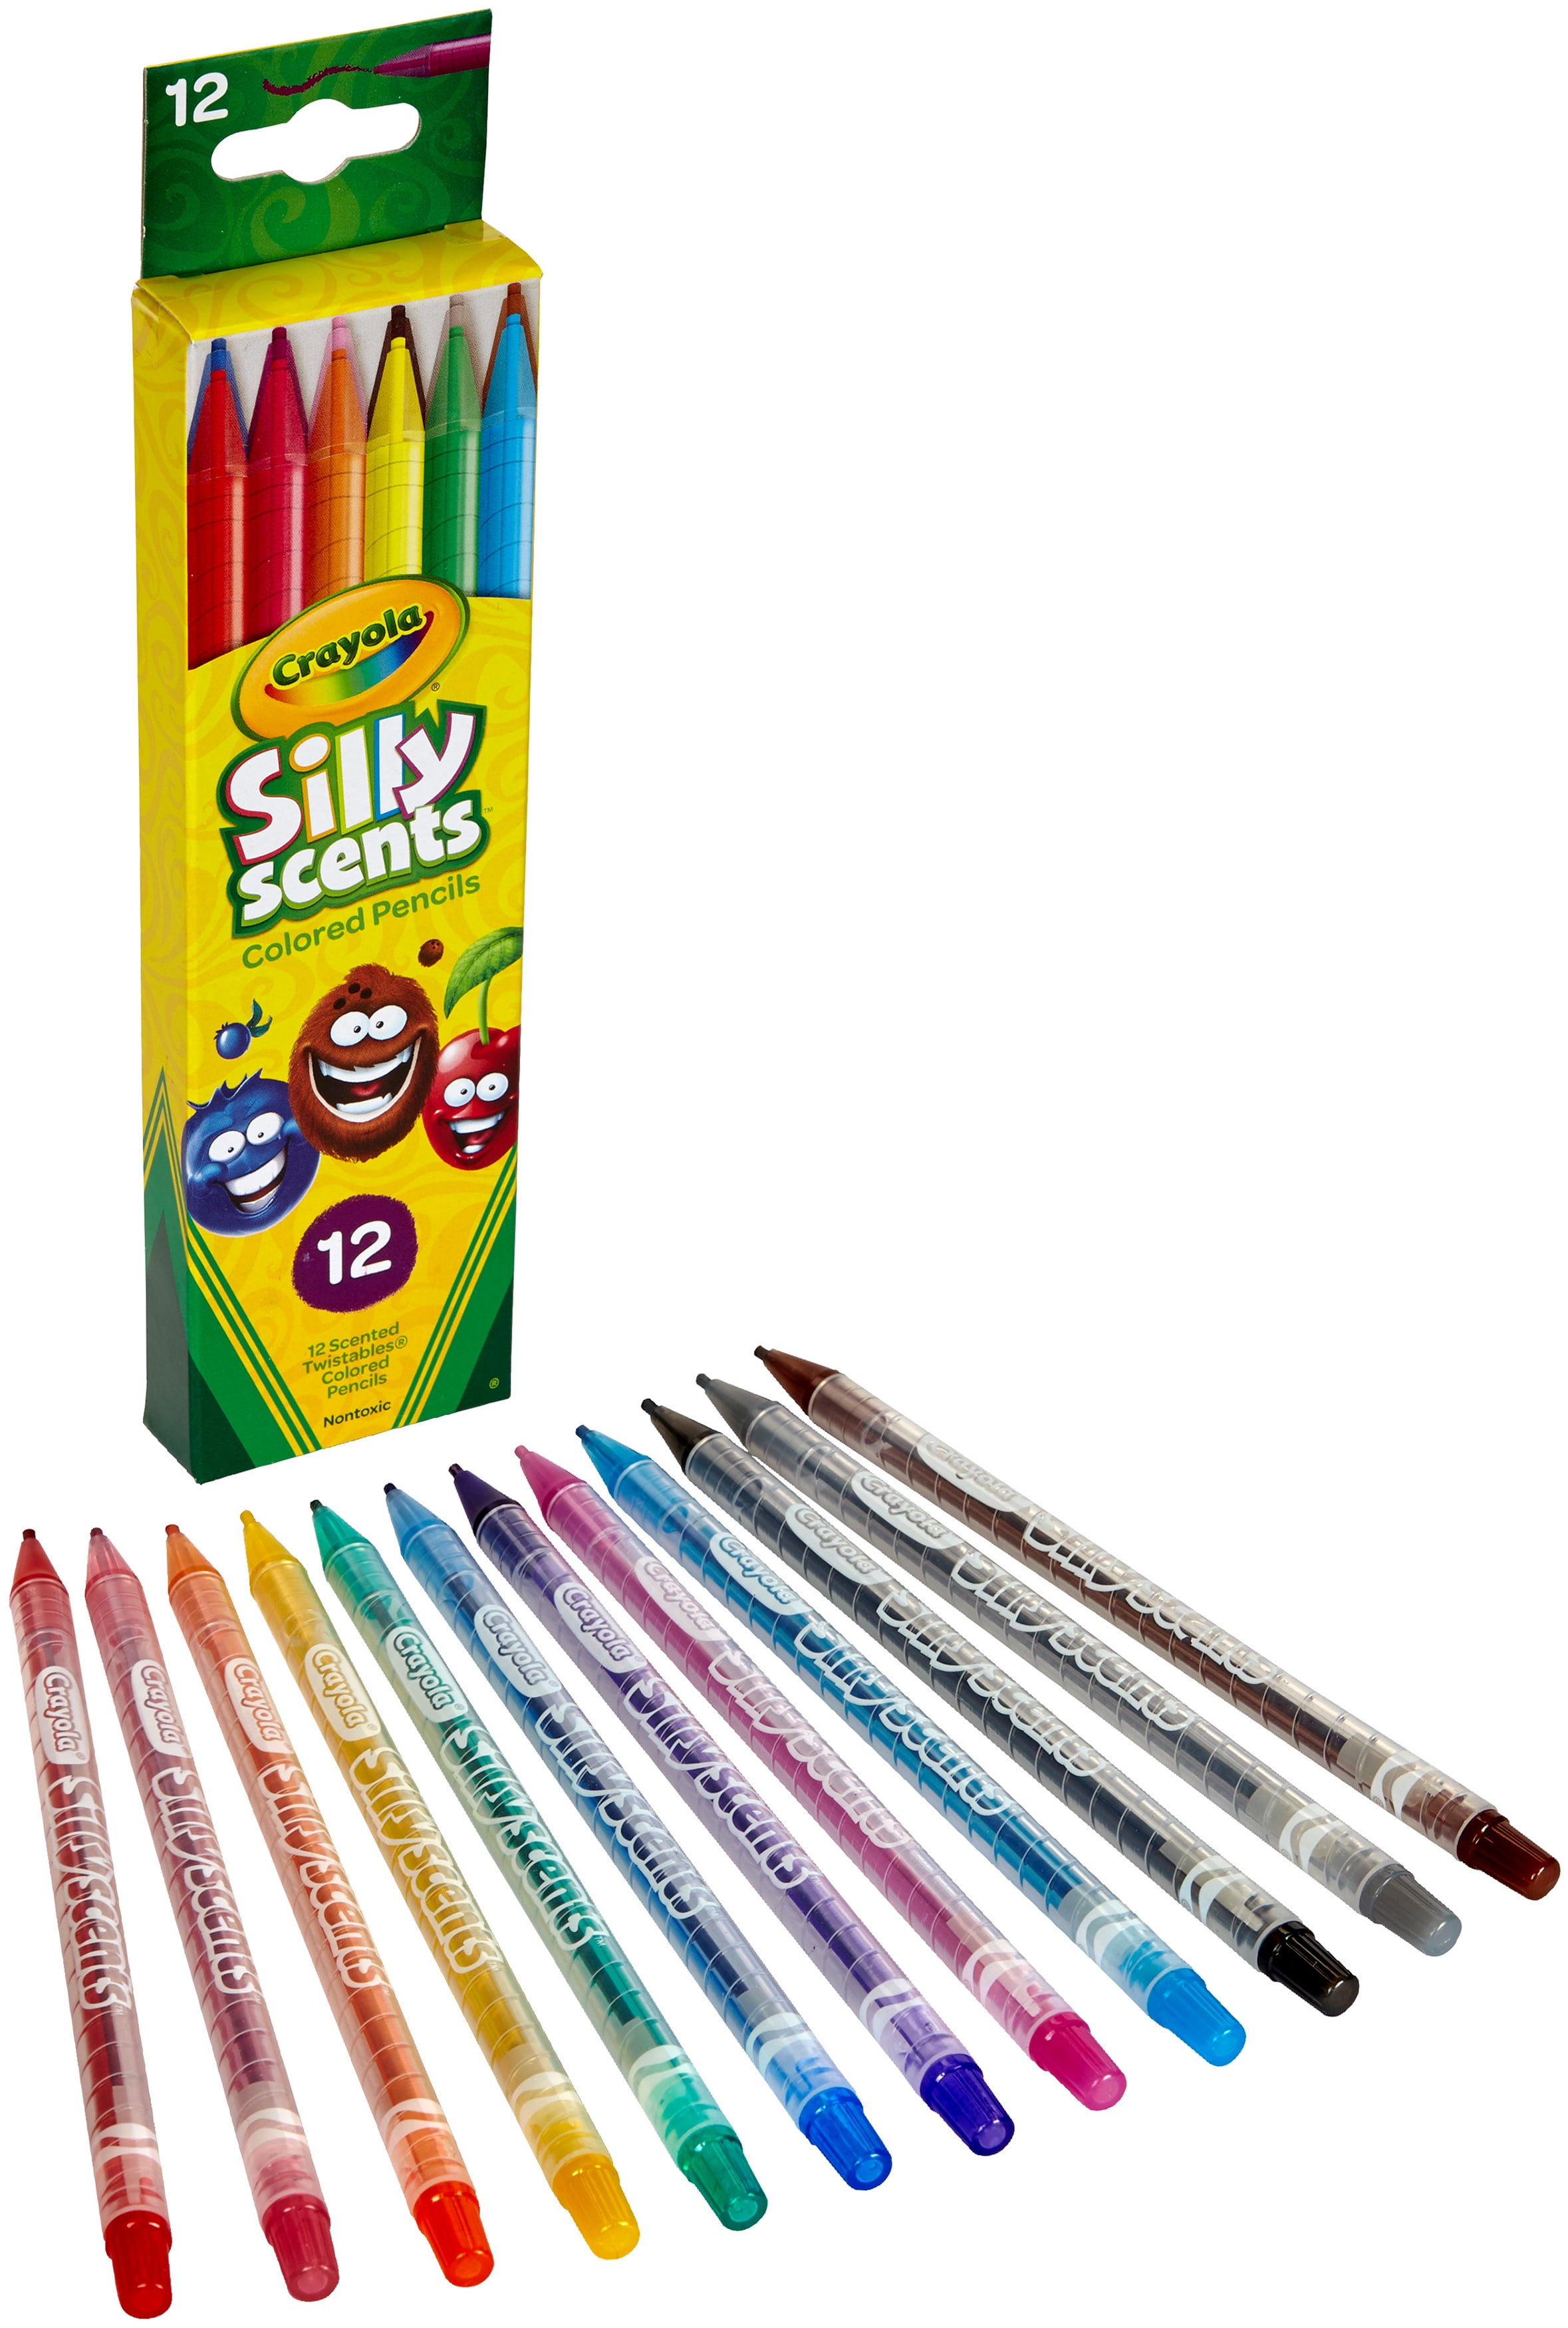 Crayola 5 Pieces Set: Bathtub Finger Paint Soap Kids 3 fl oz, Blue, Red,  Green, Pink & Purple